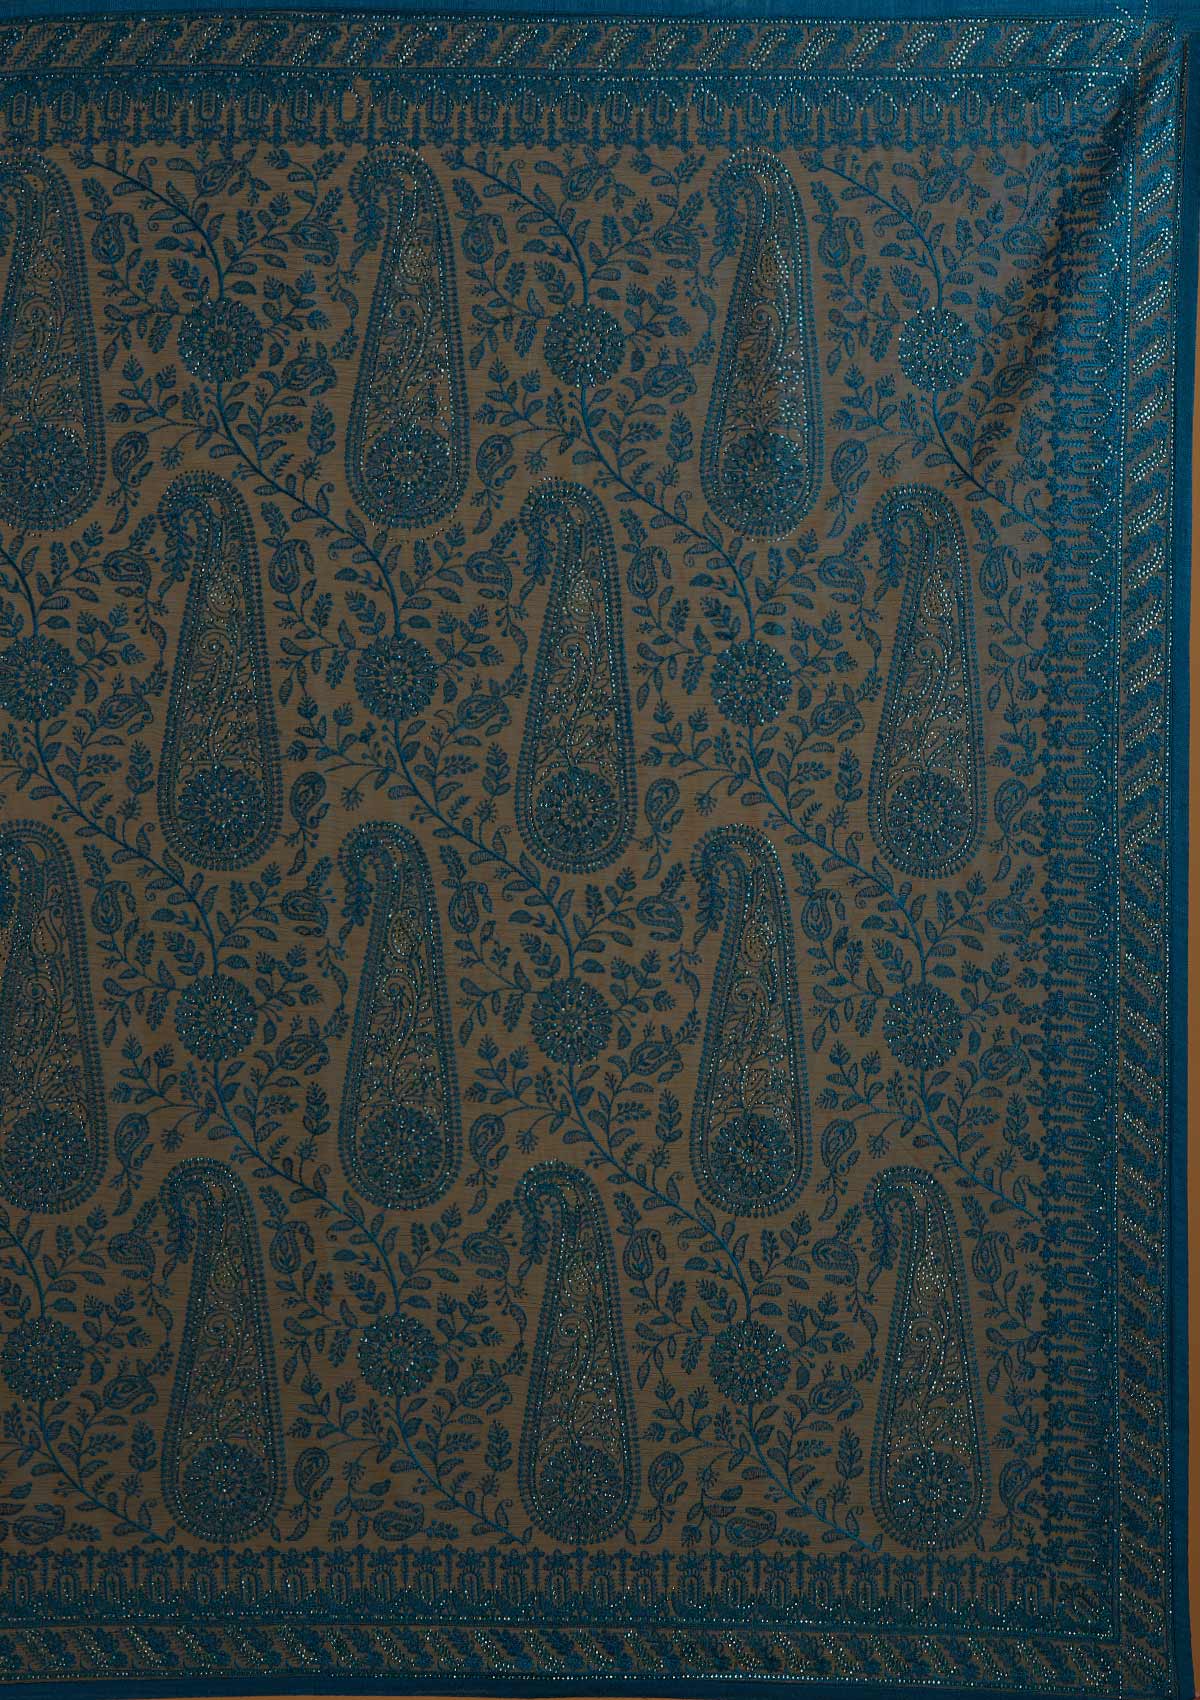 Peacock Blue Threadwork Net Designer Saree - Koskii